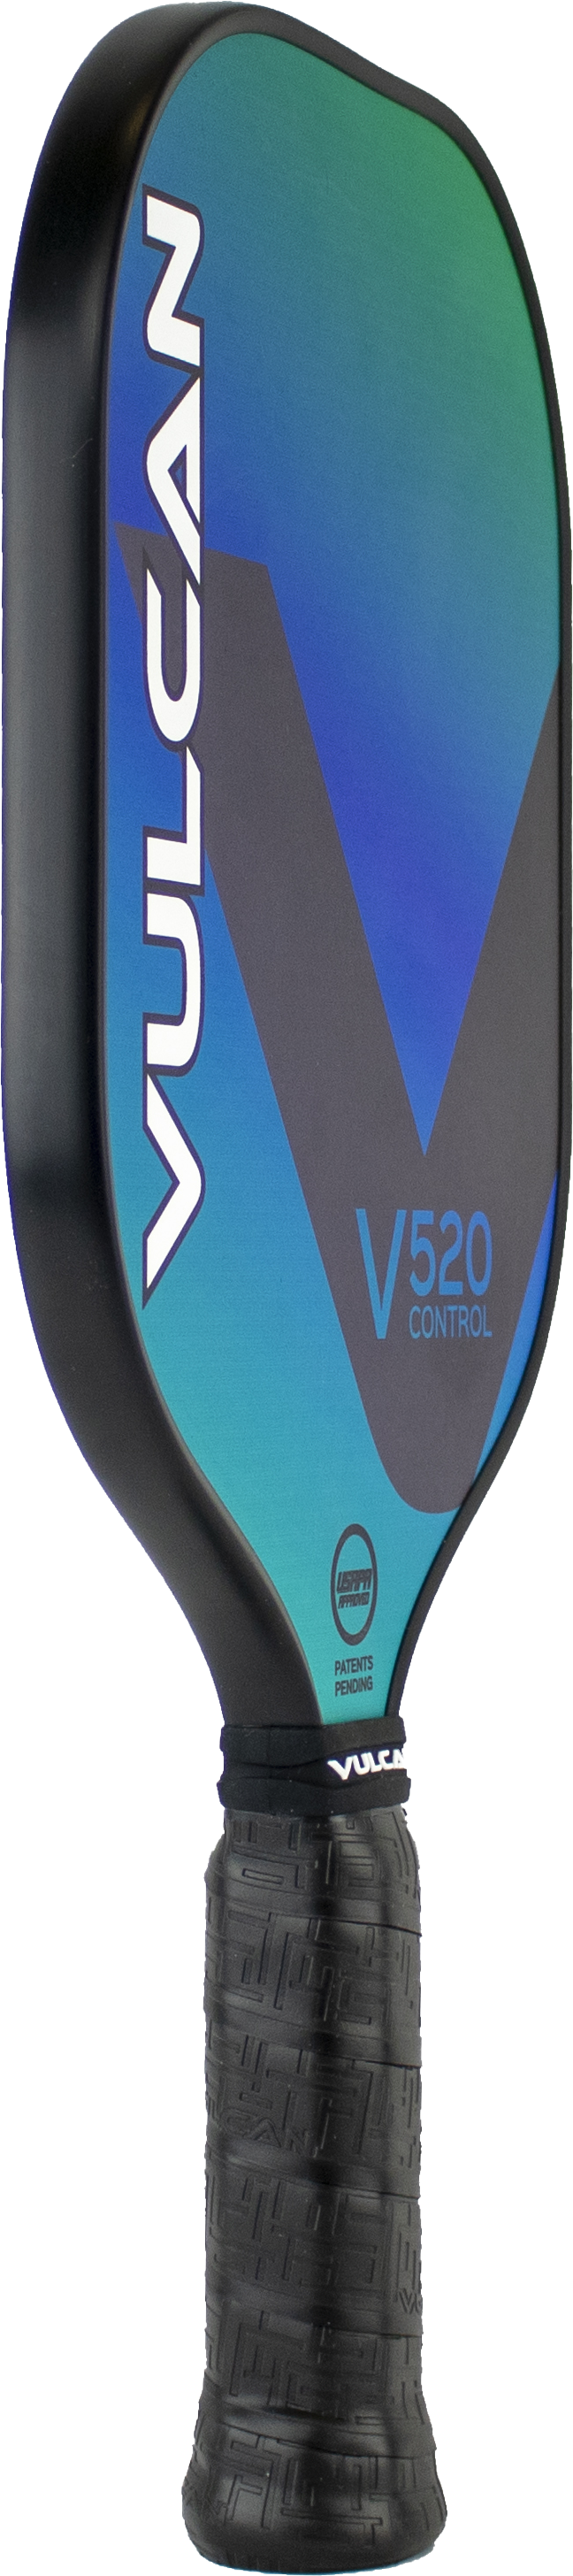 Vulcan V520 Control Pickleball Paddle